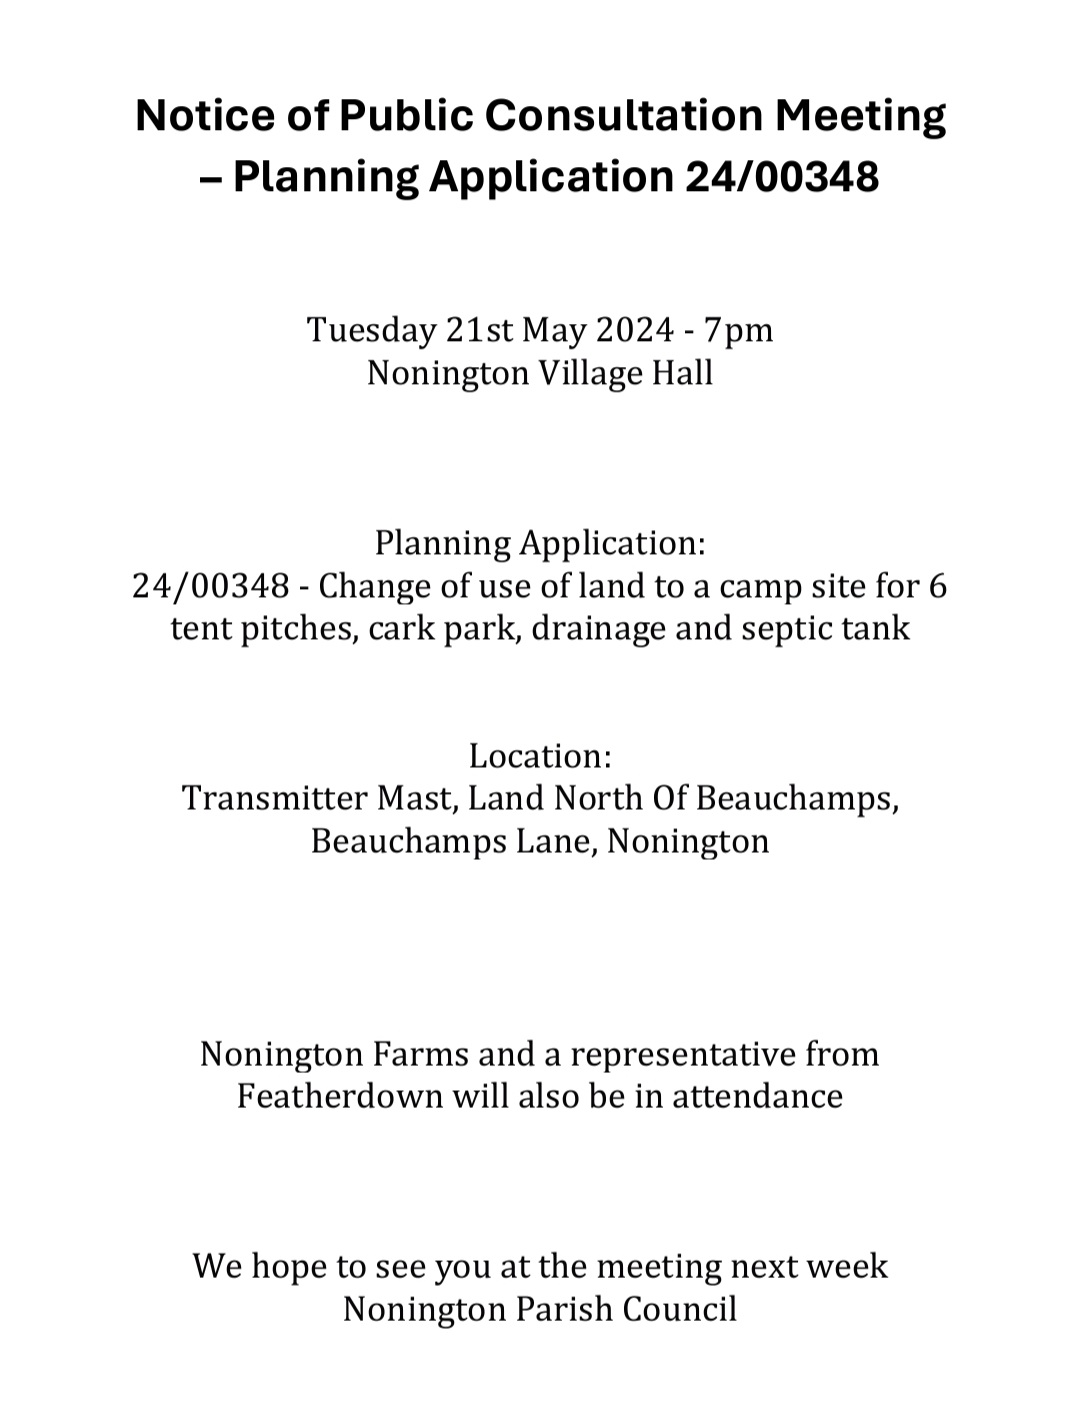 Public Consultation Meeting - Planning Application 24/00348